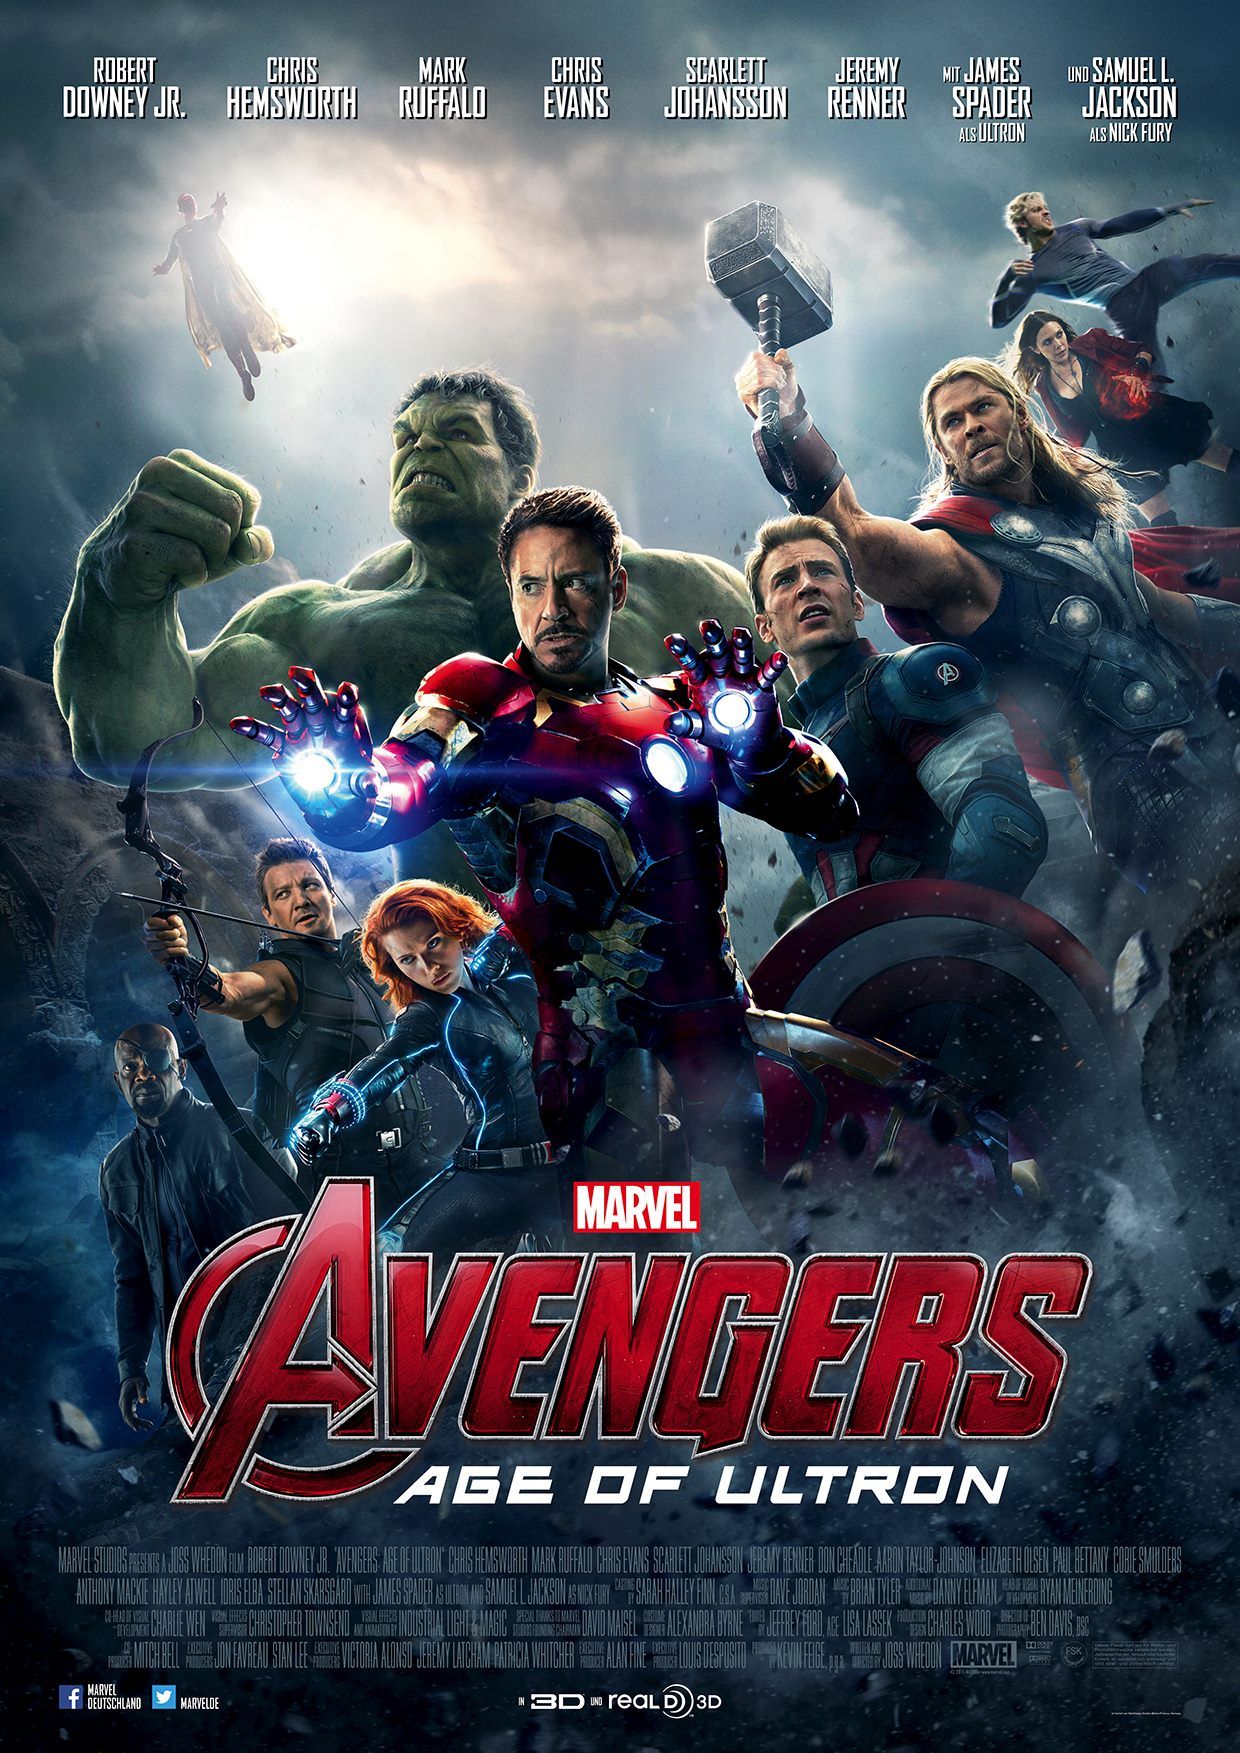 Avengers Age of Ultron (2015) Hindi Dubbed Full Movie